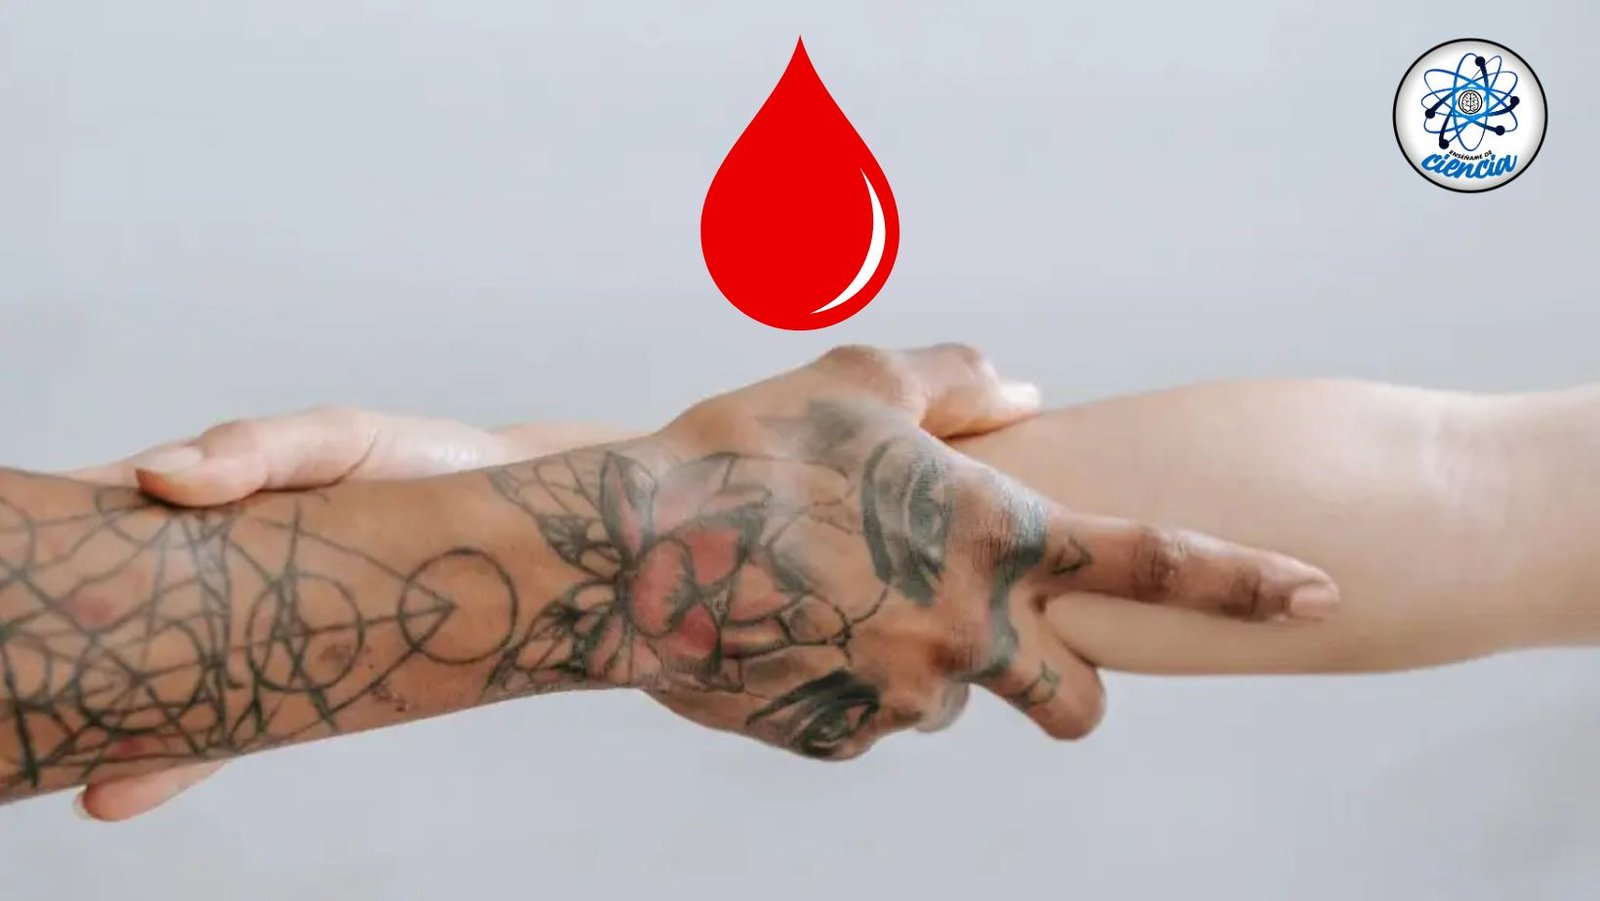 Donar sangre después de un tatuaje: la verdad científica